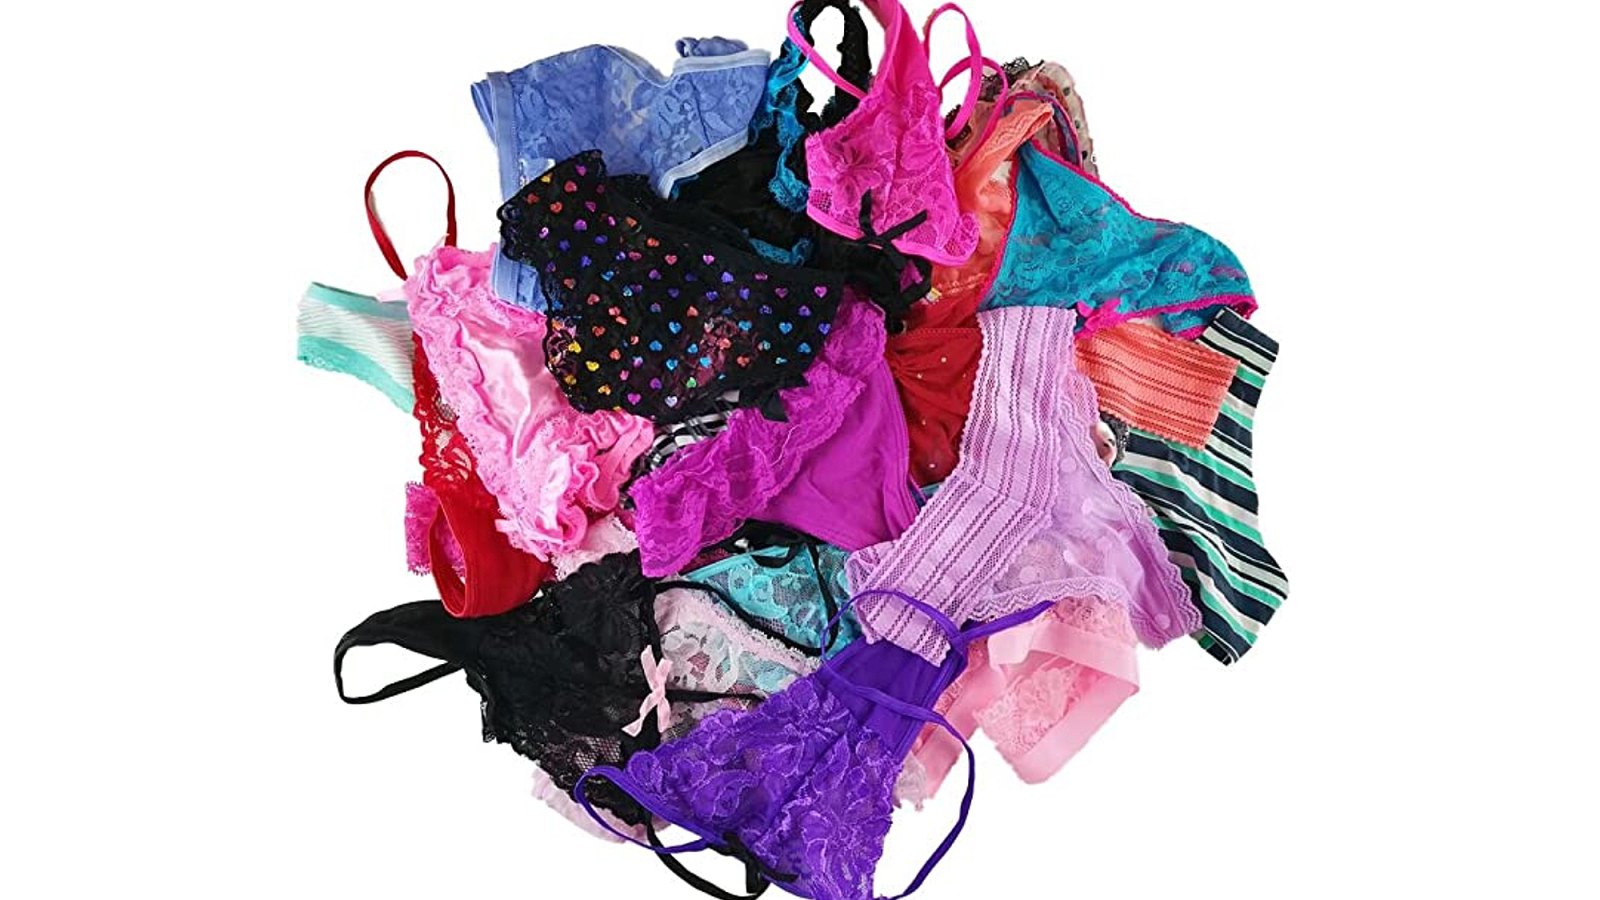 Jooniyaa Thong Variety Pack Lets You Refresh Your Underwear Drawer